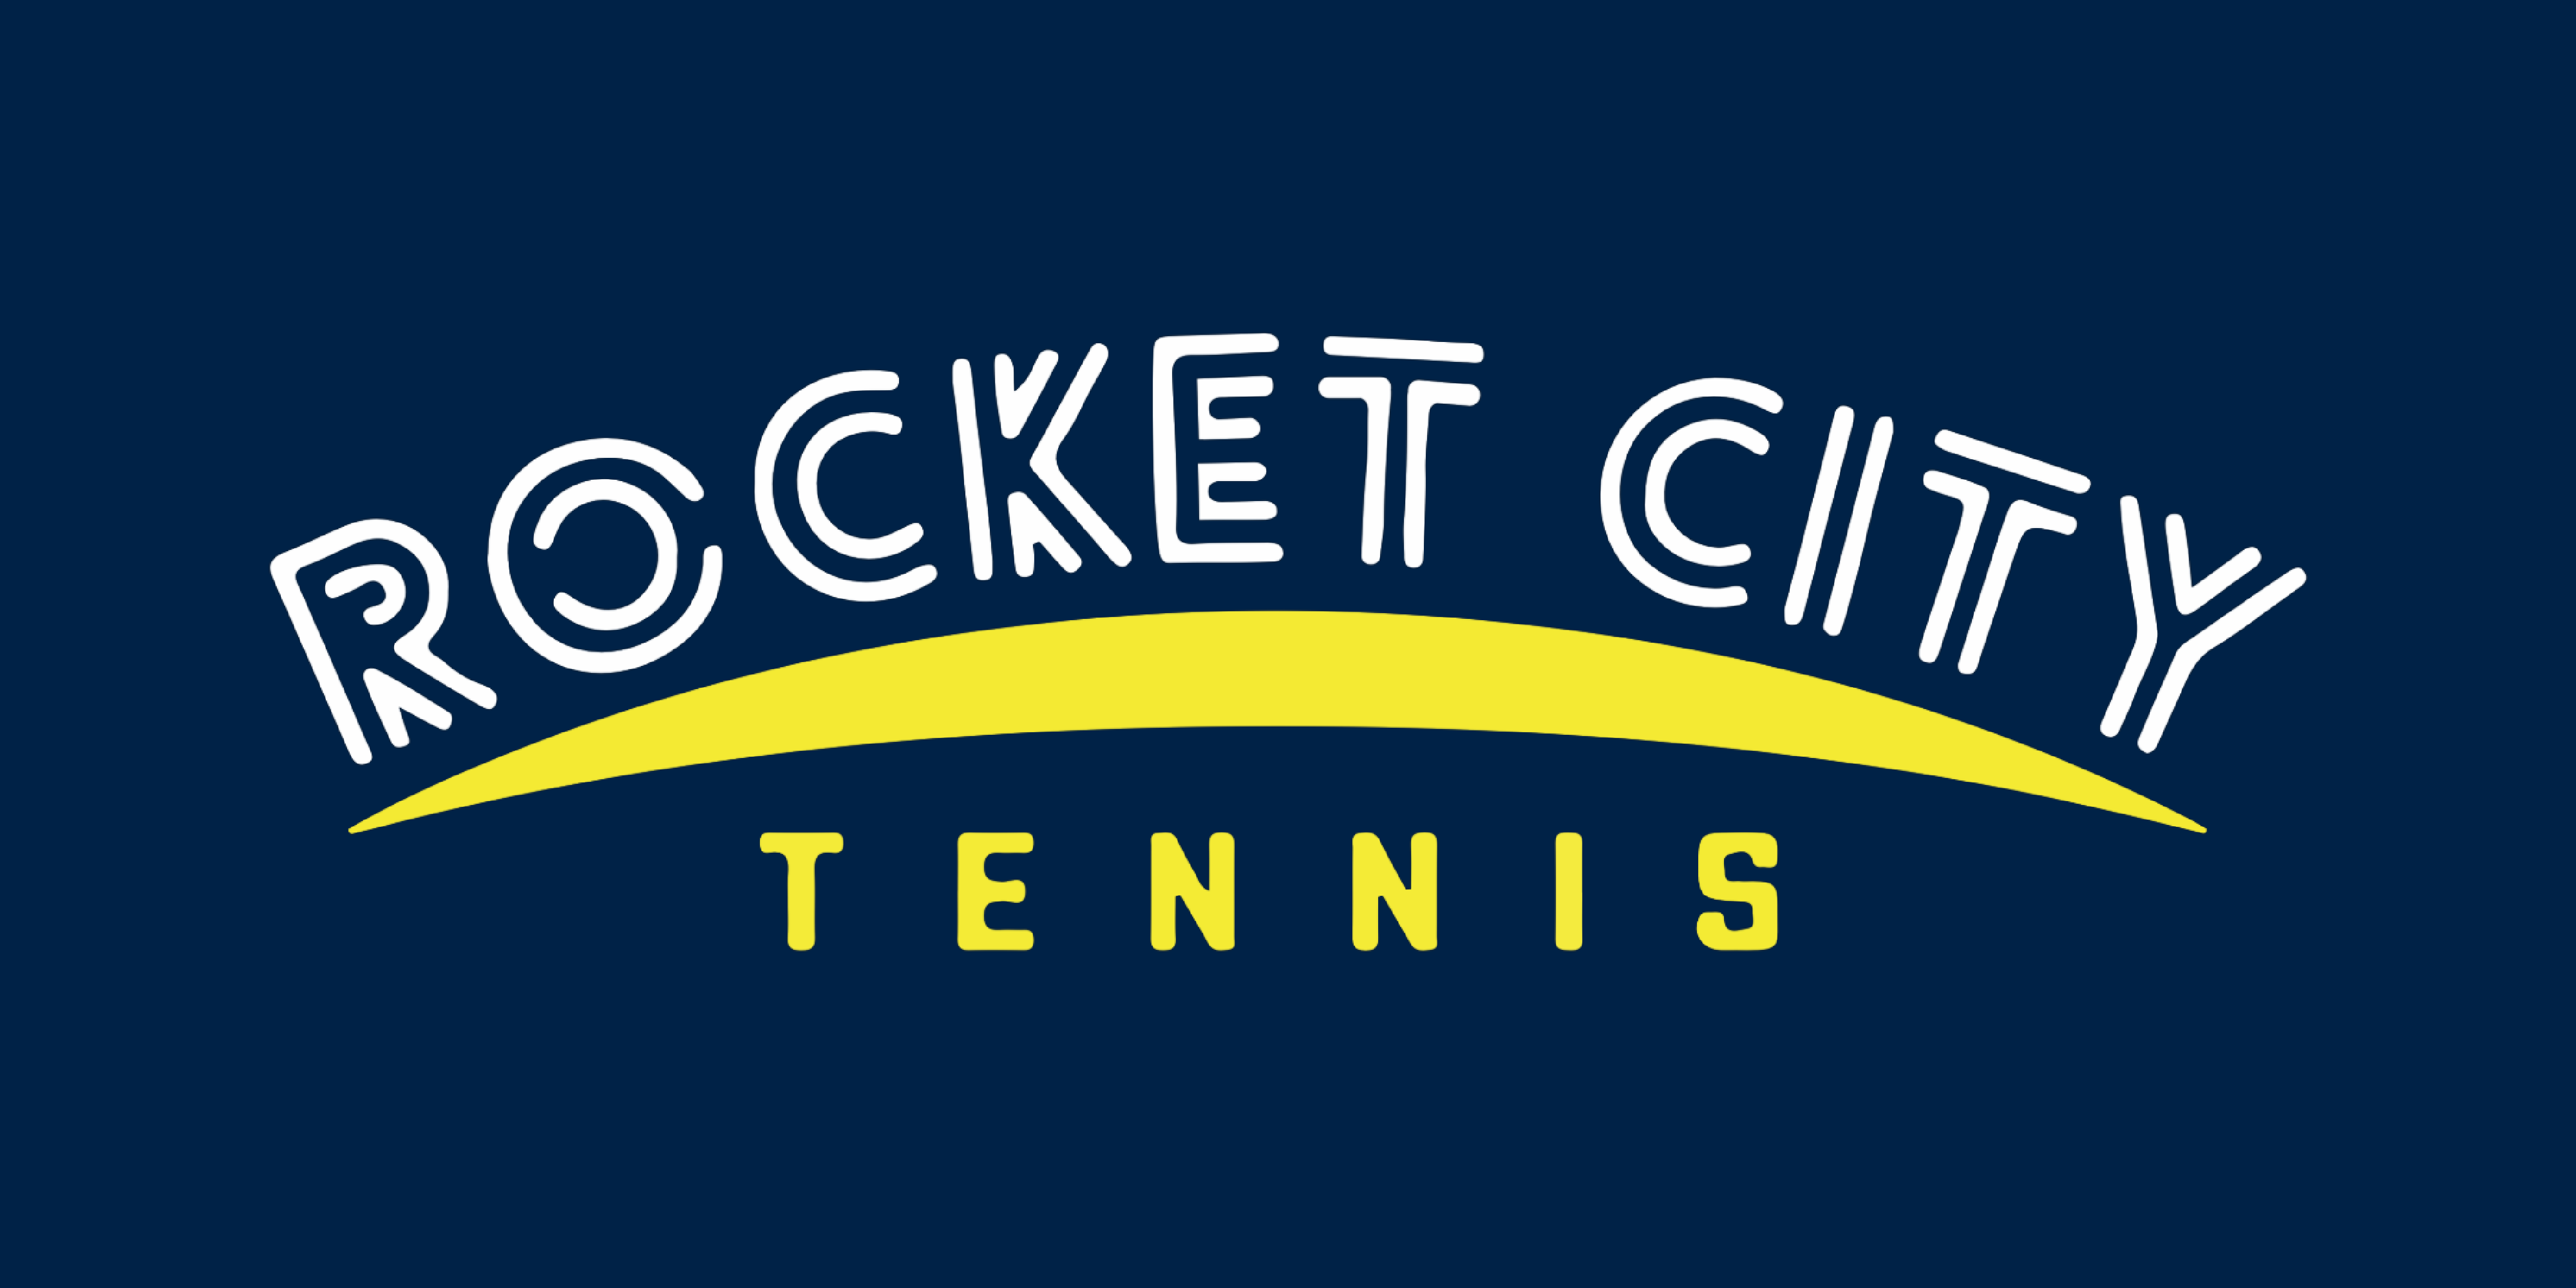 Rocket City Tennis | tpatennis.com